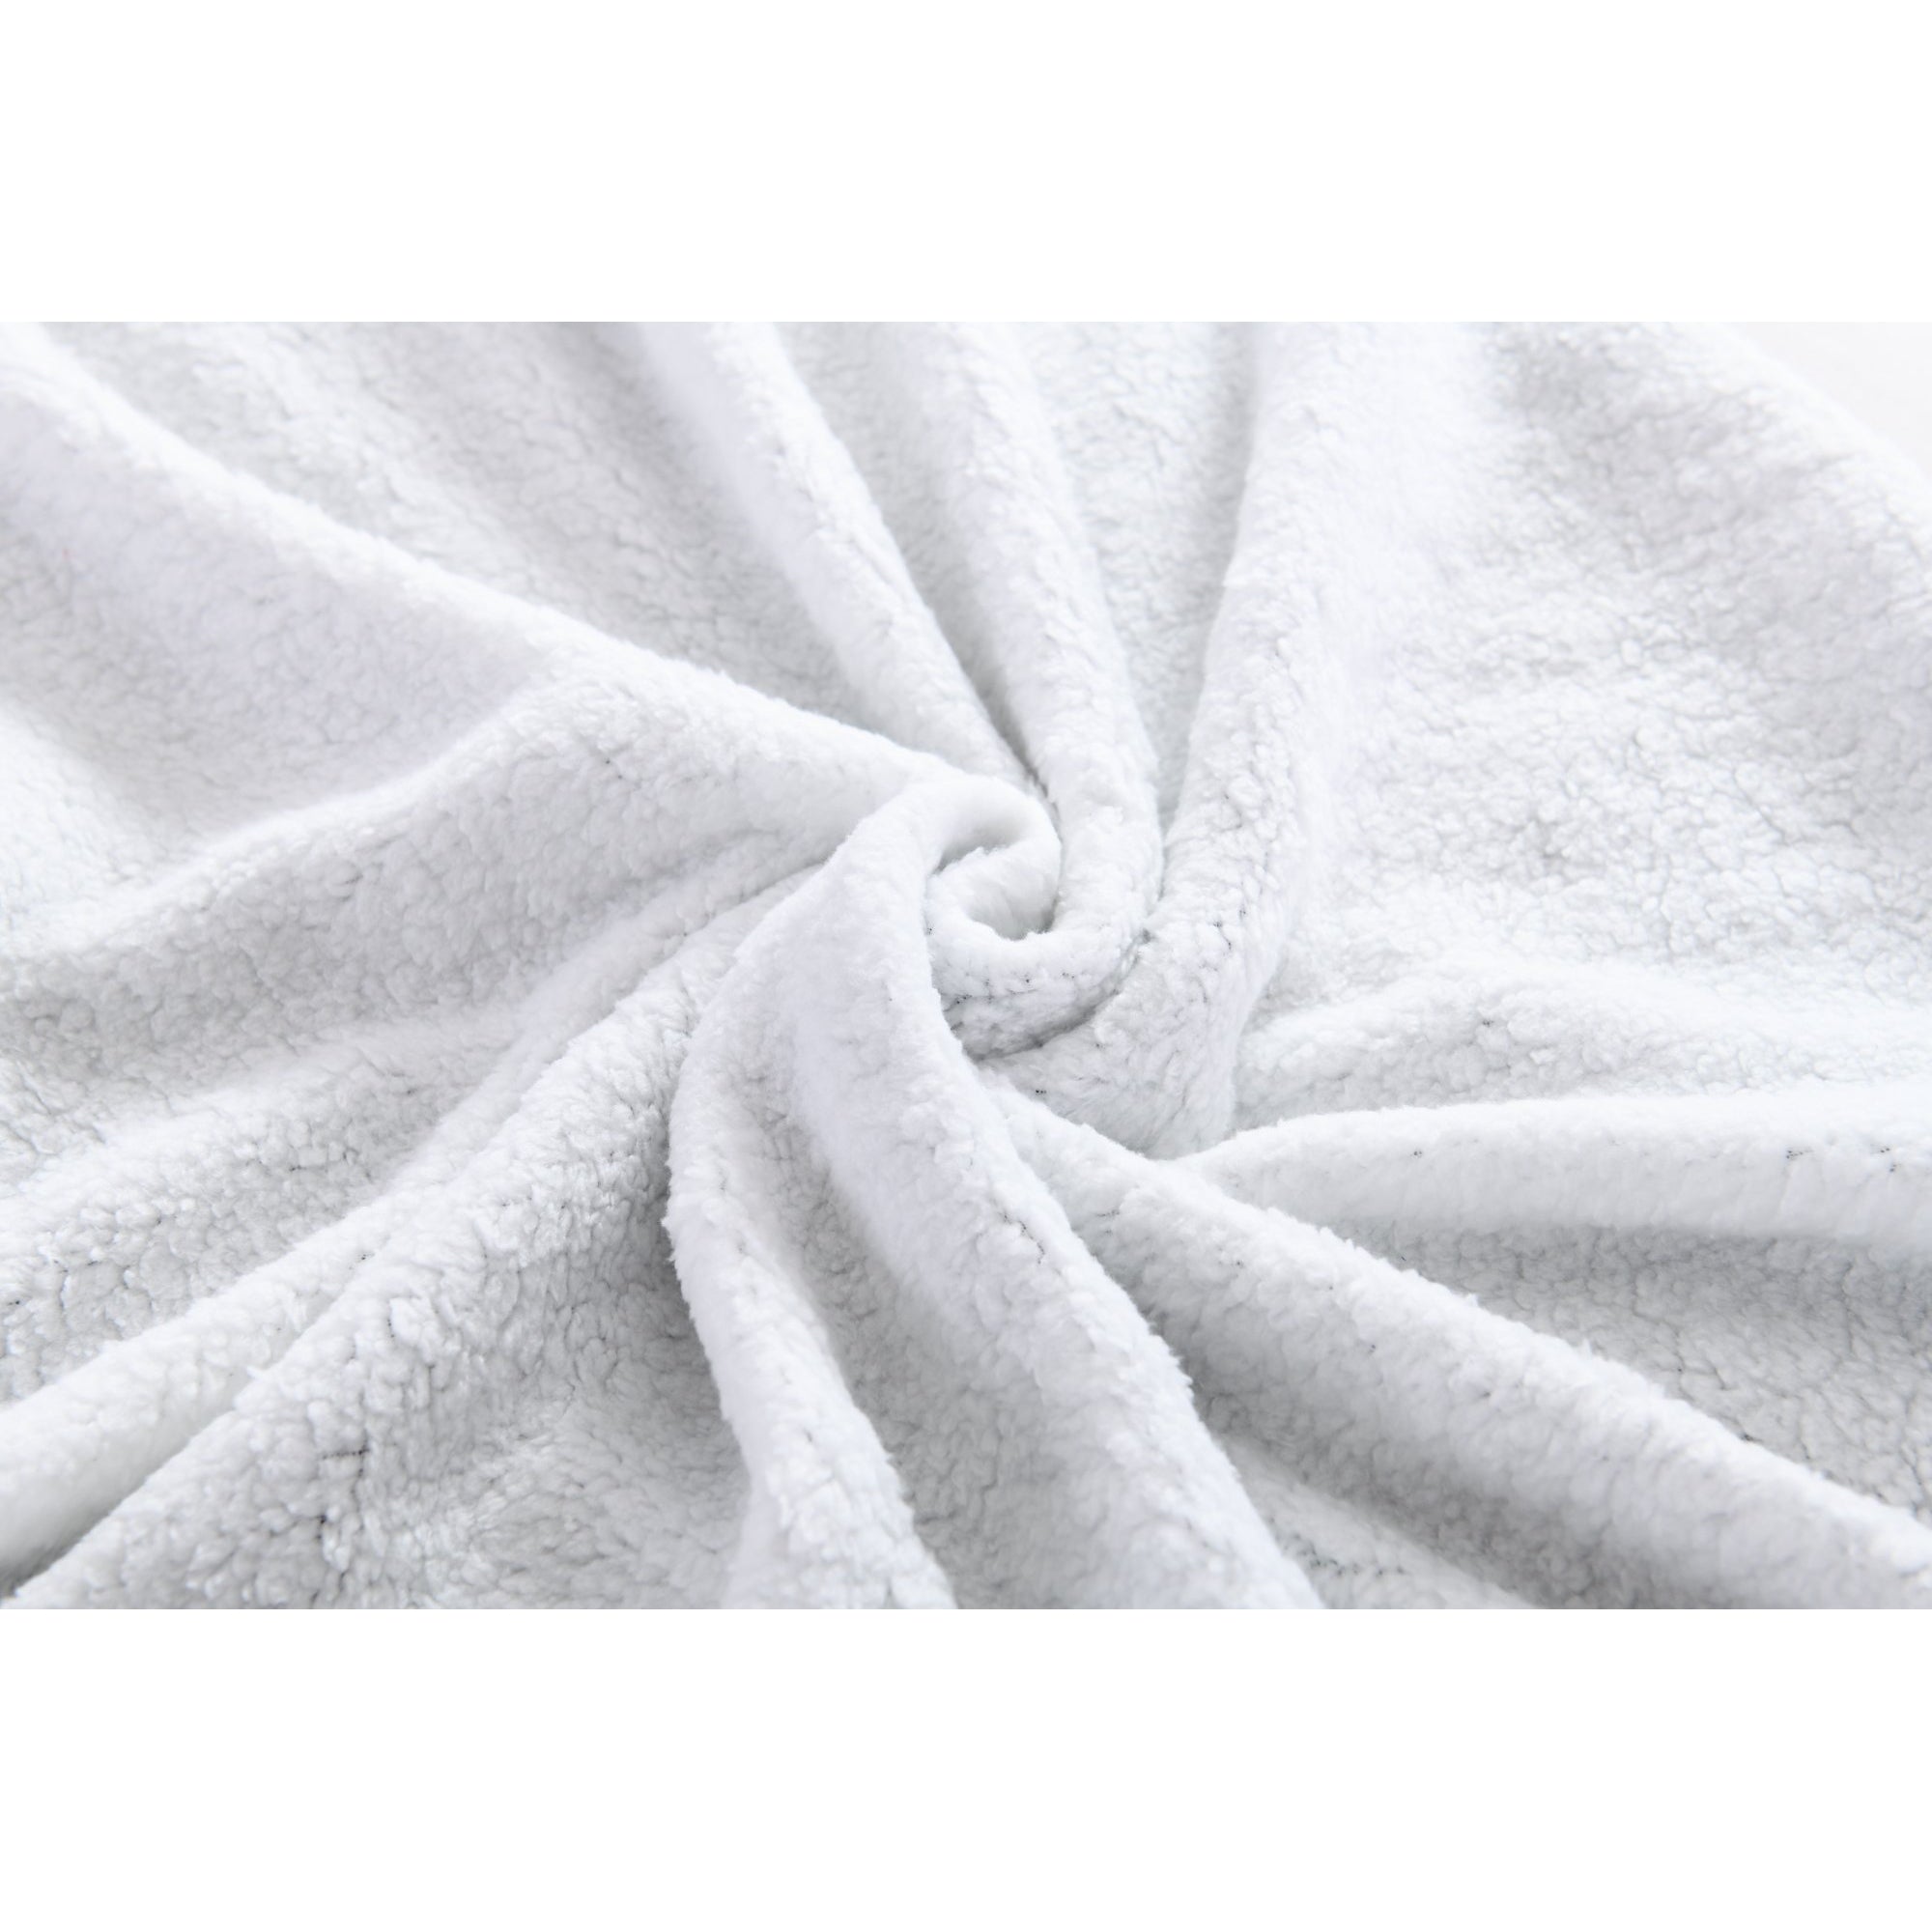 1 Piece Sherpa Throw Blanket Bed Blanket